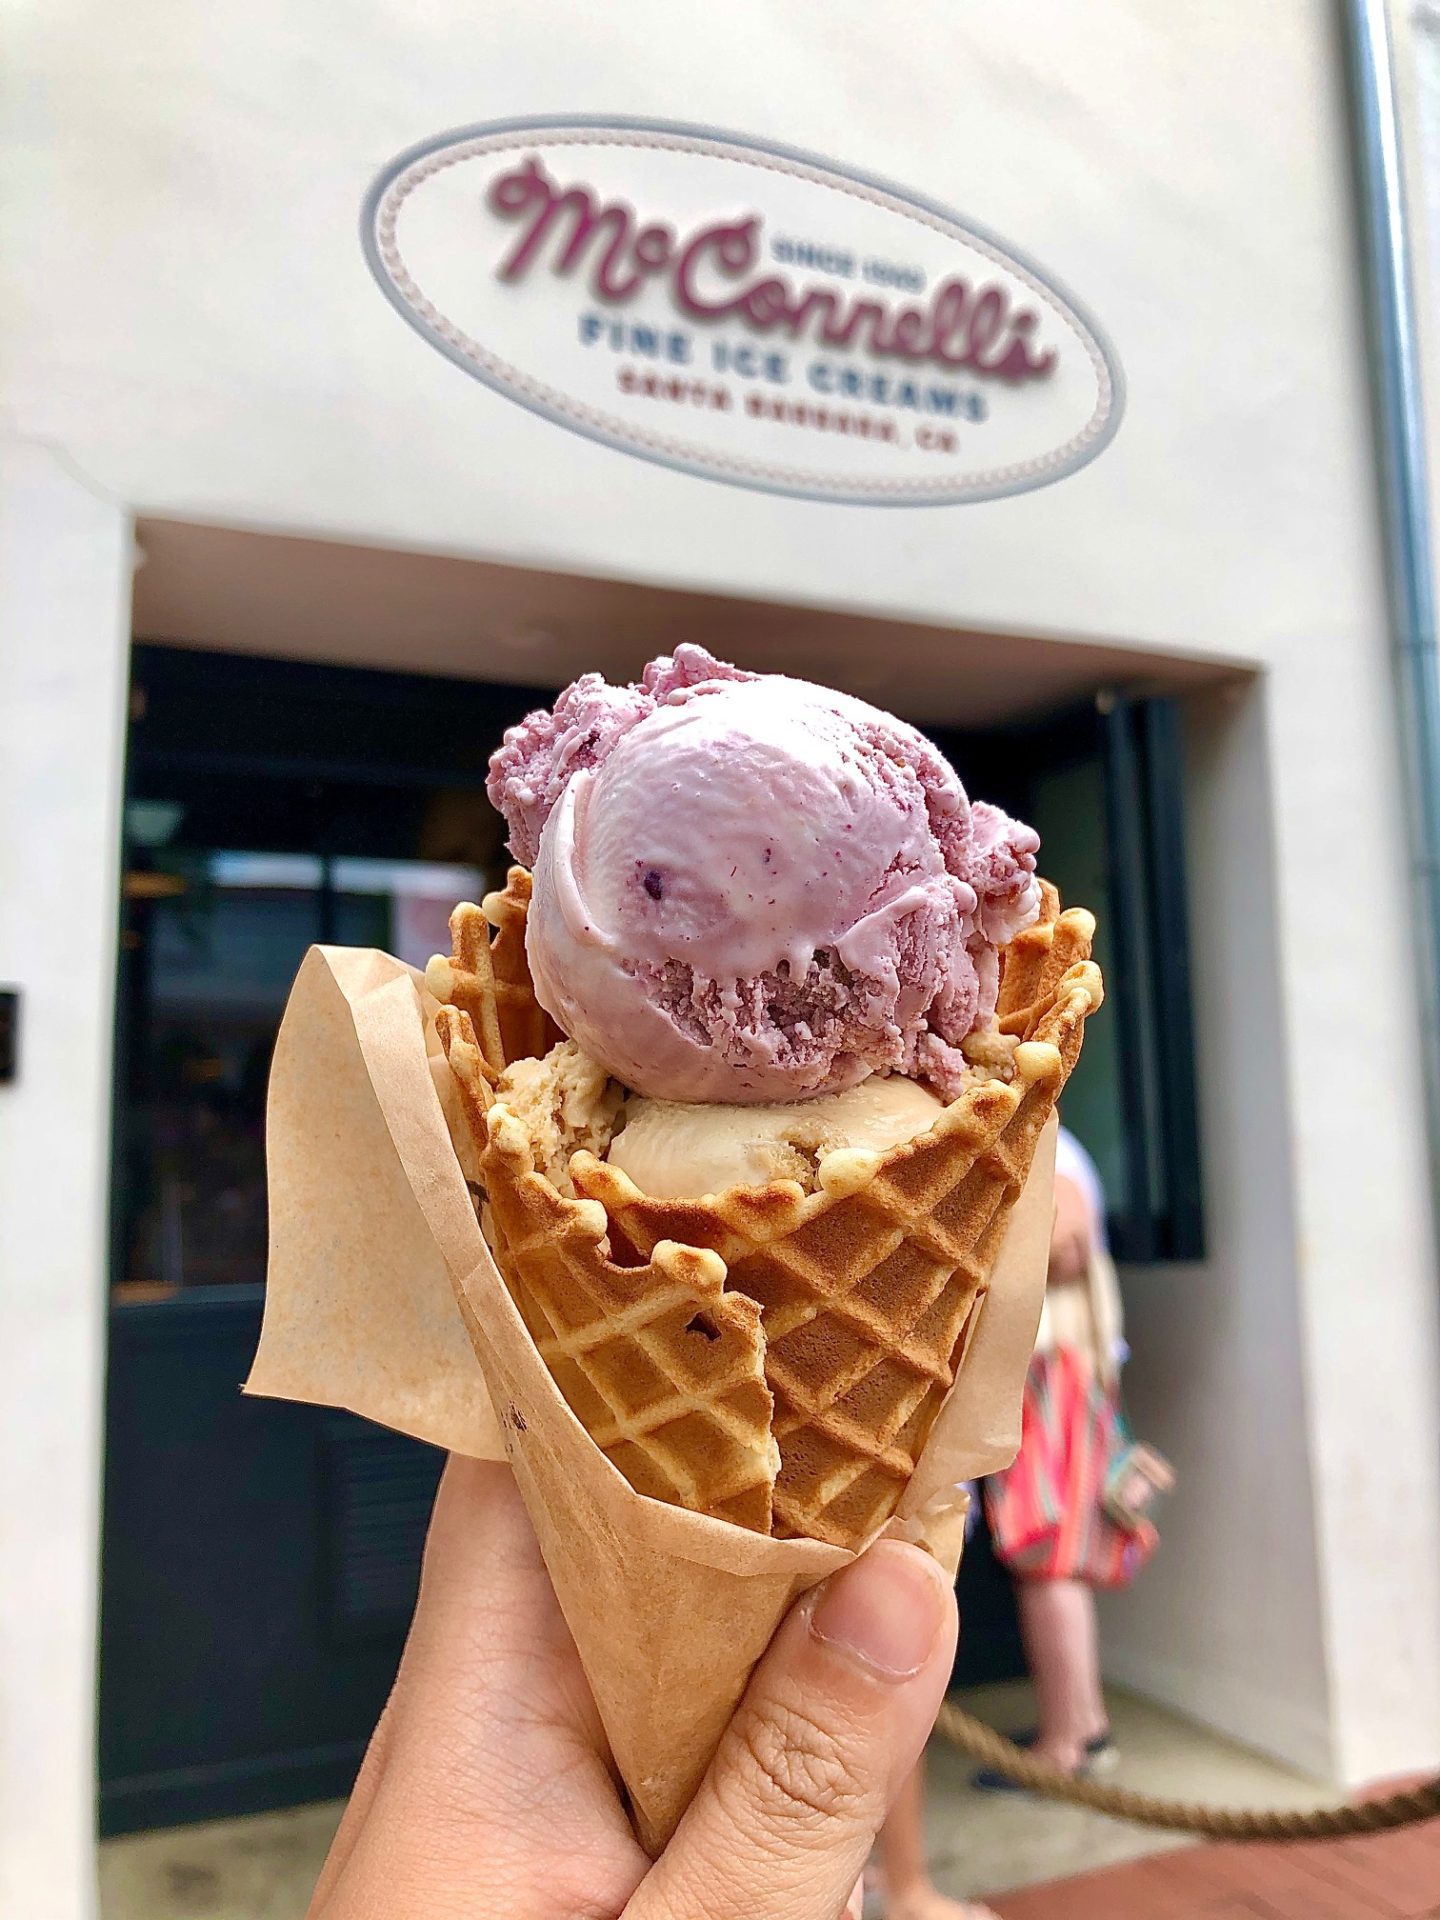 McConnell's Ice Cream Santa Barbara